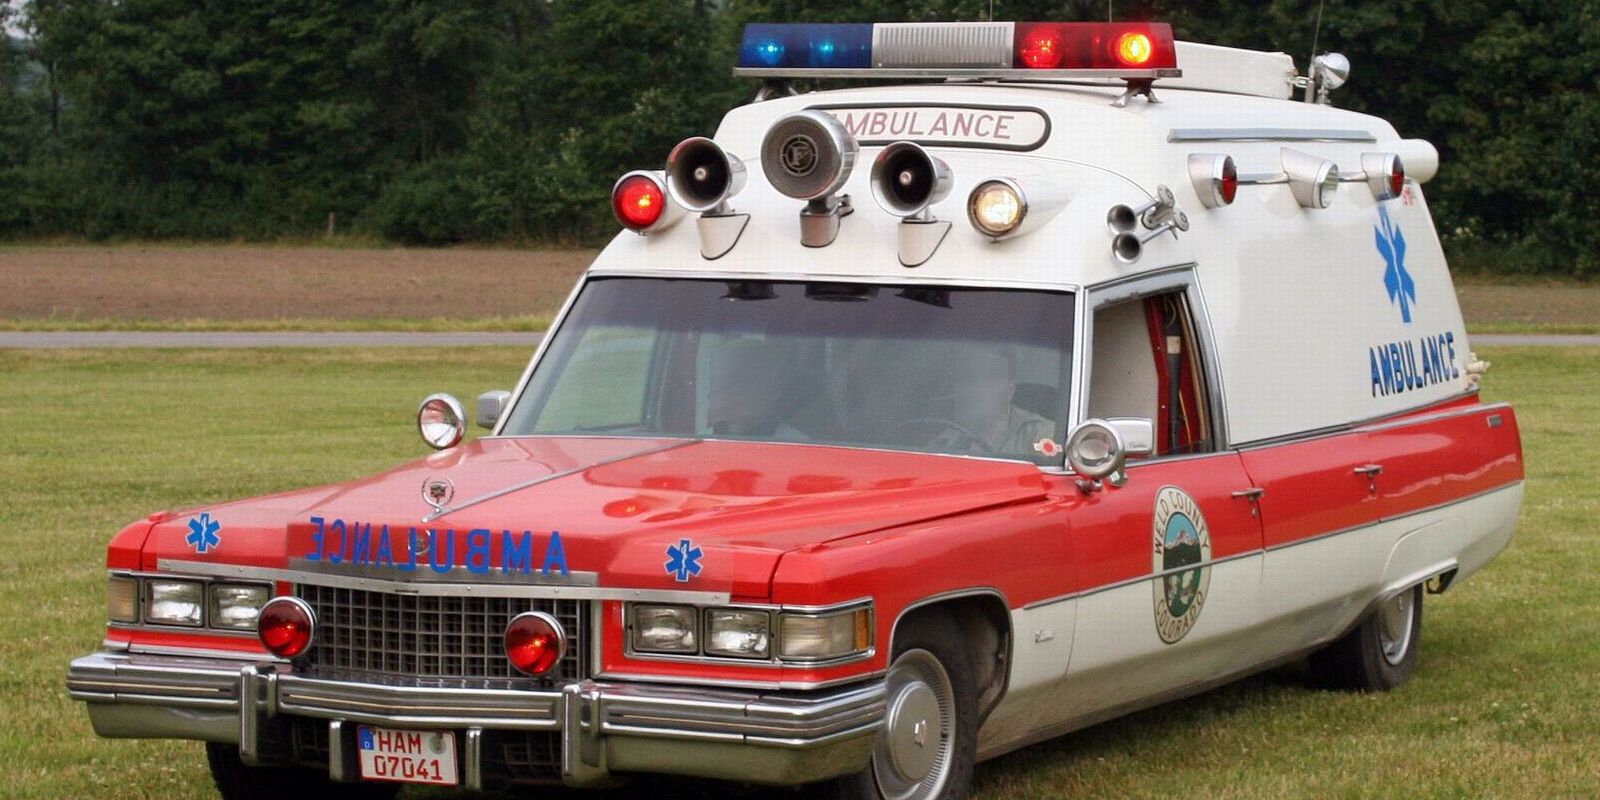 Photoshoot of a 1975 Cadillac ambulance